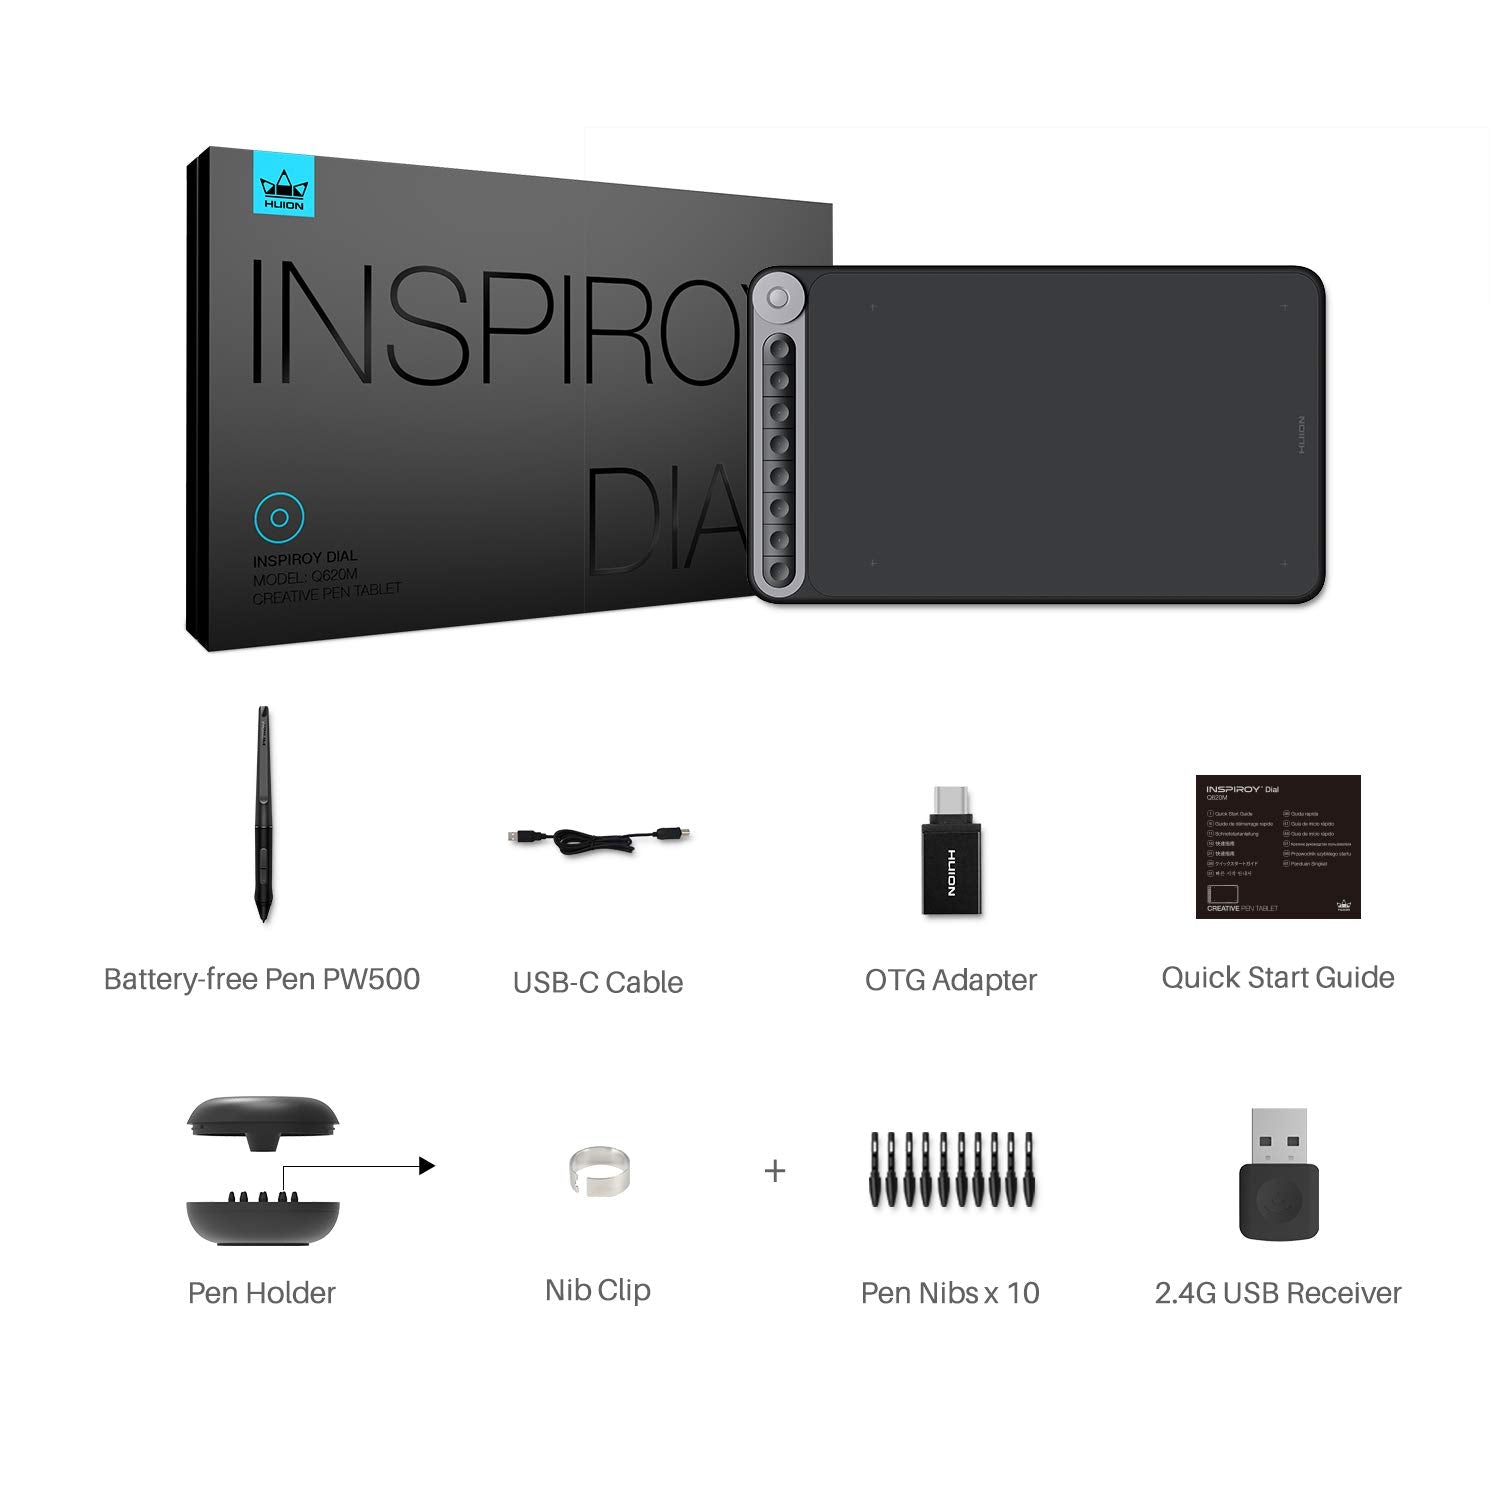 Huion Inspiroy Q620M- Wireless Digital Graphic Tablet